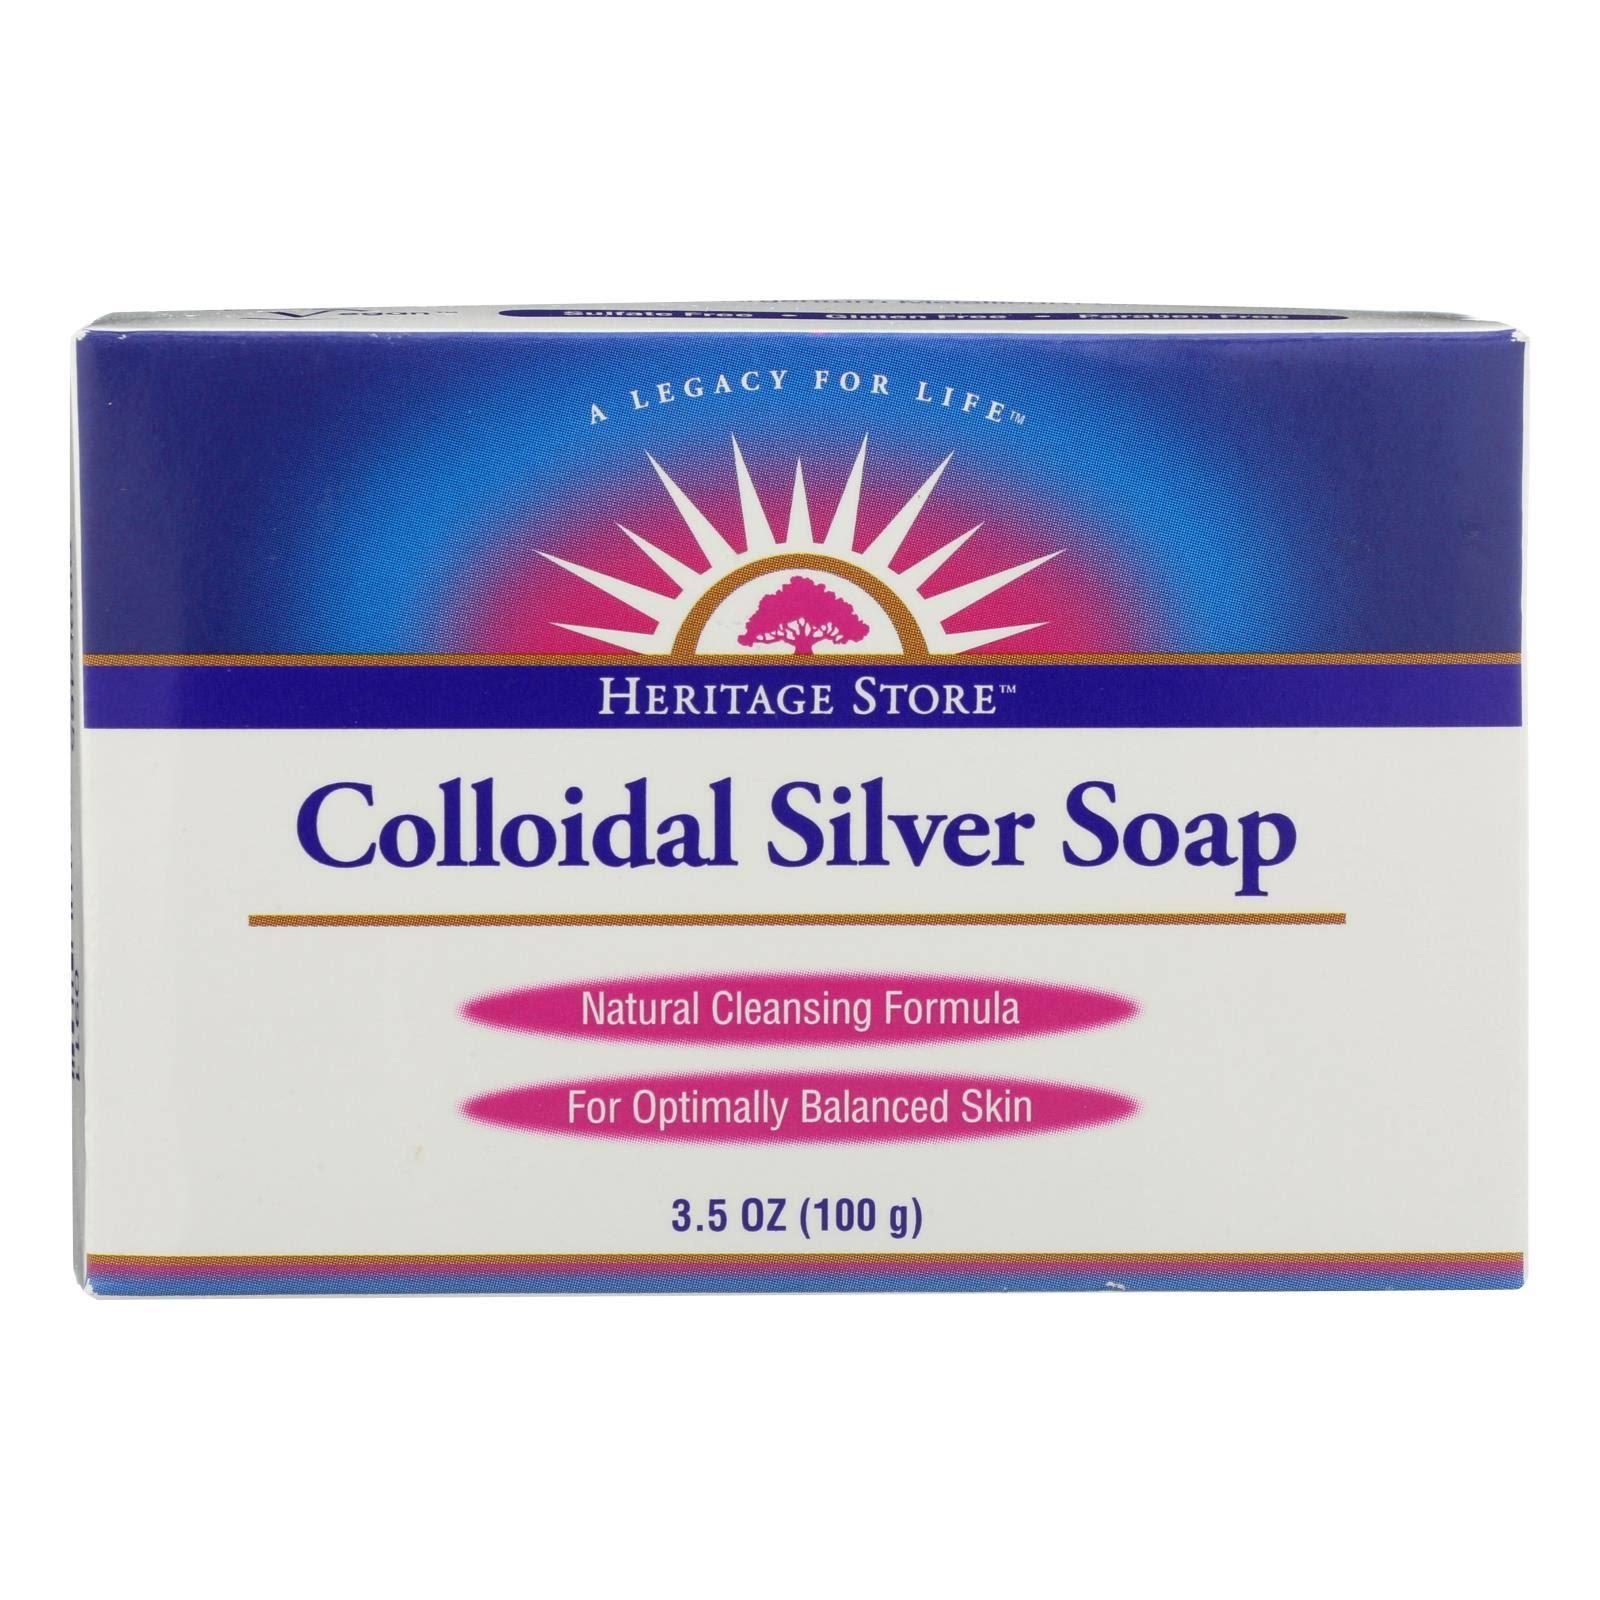 Heritage Store Colloidal Silver Soap Bar 3.5 oz